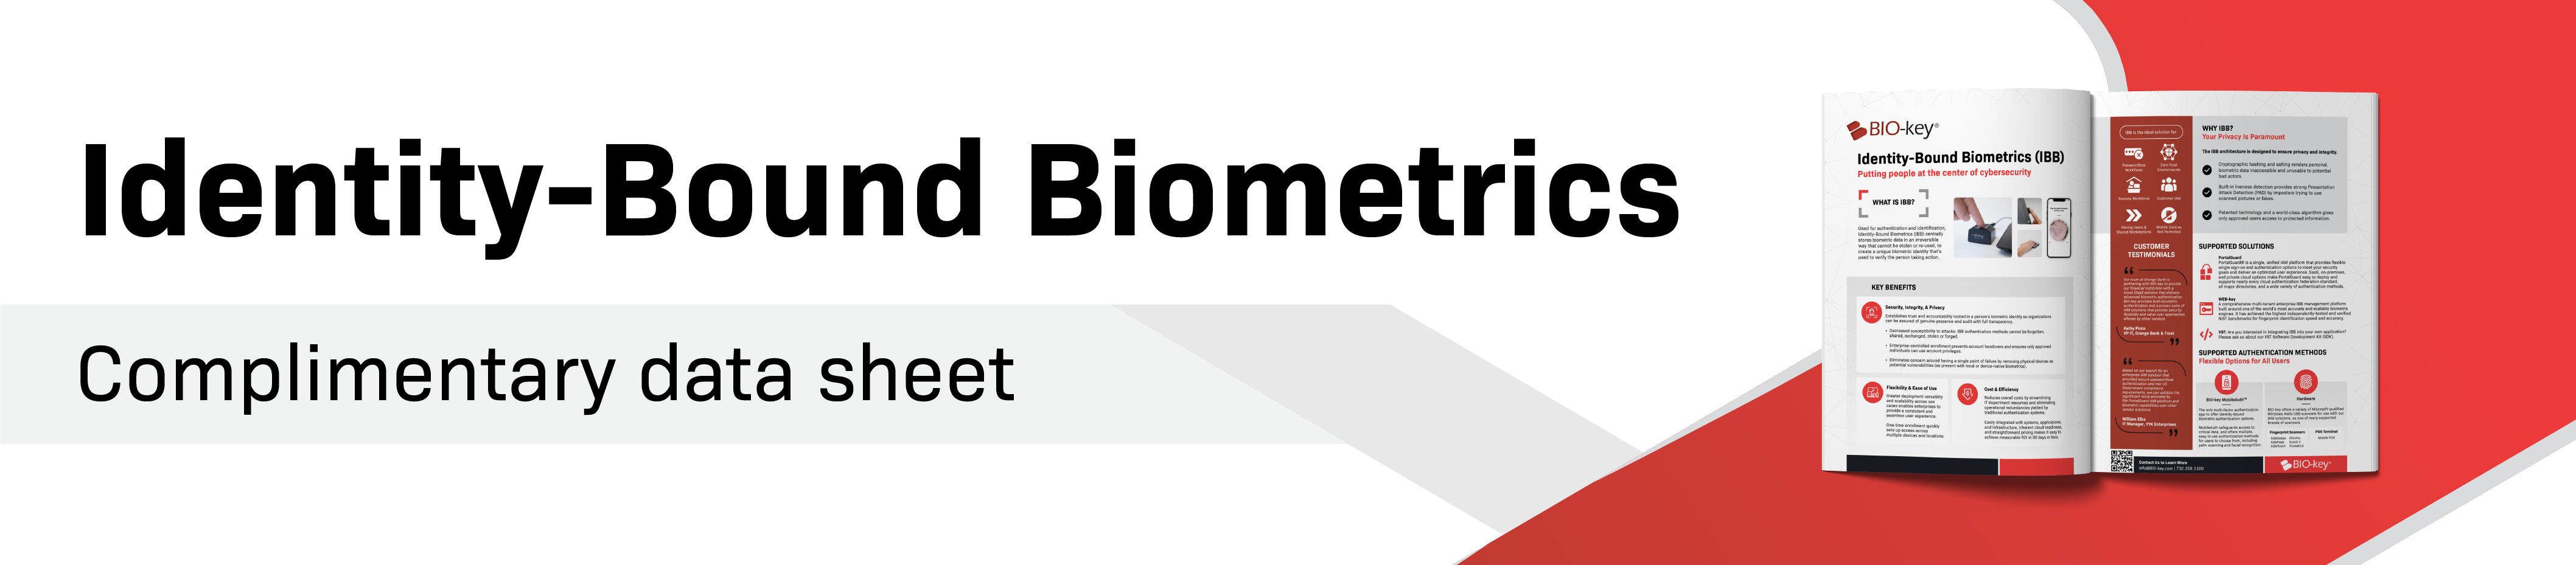 Identity-Bound Biometrics: Complimentary data sheet